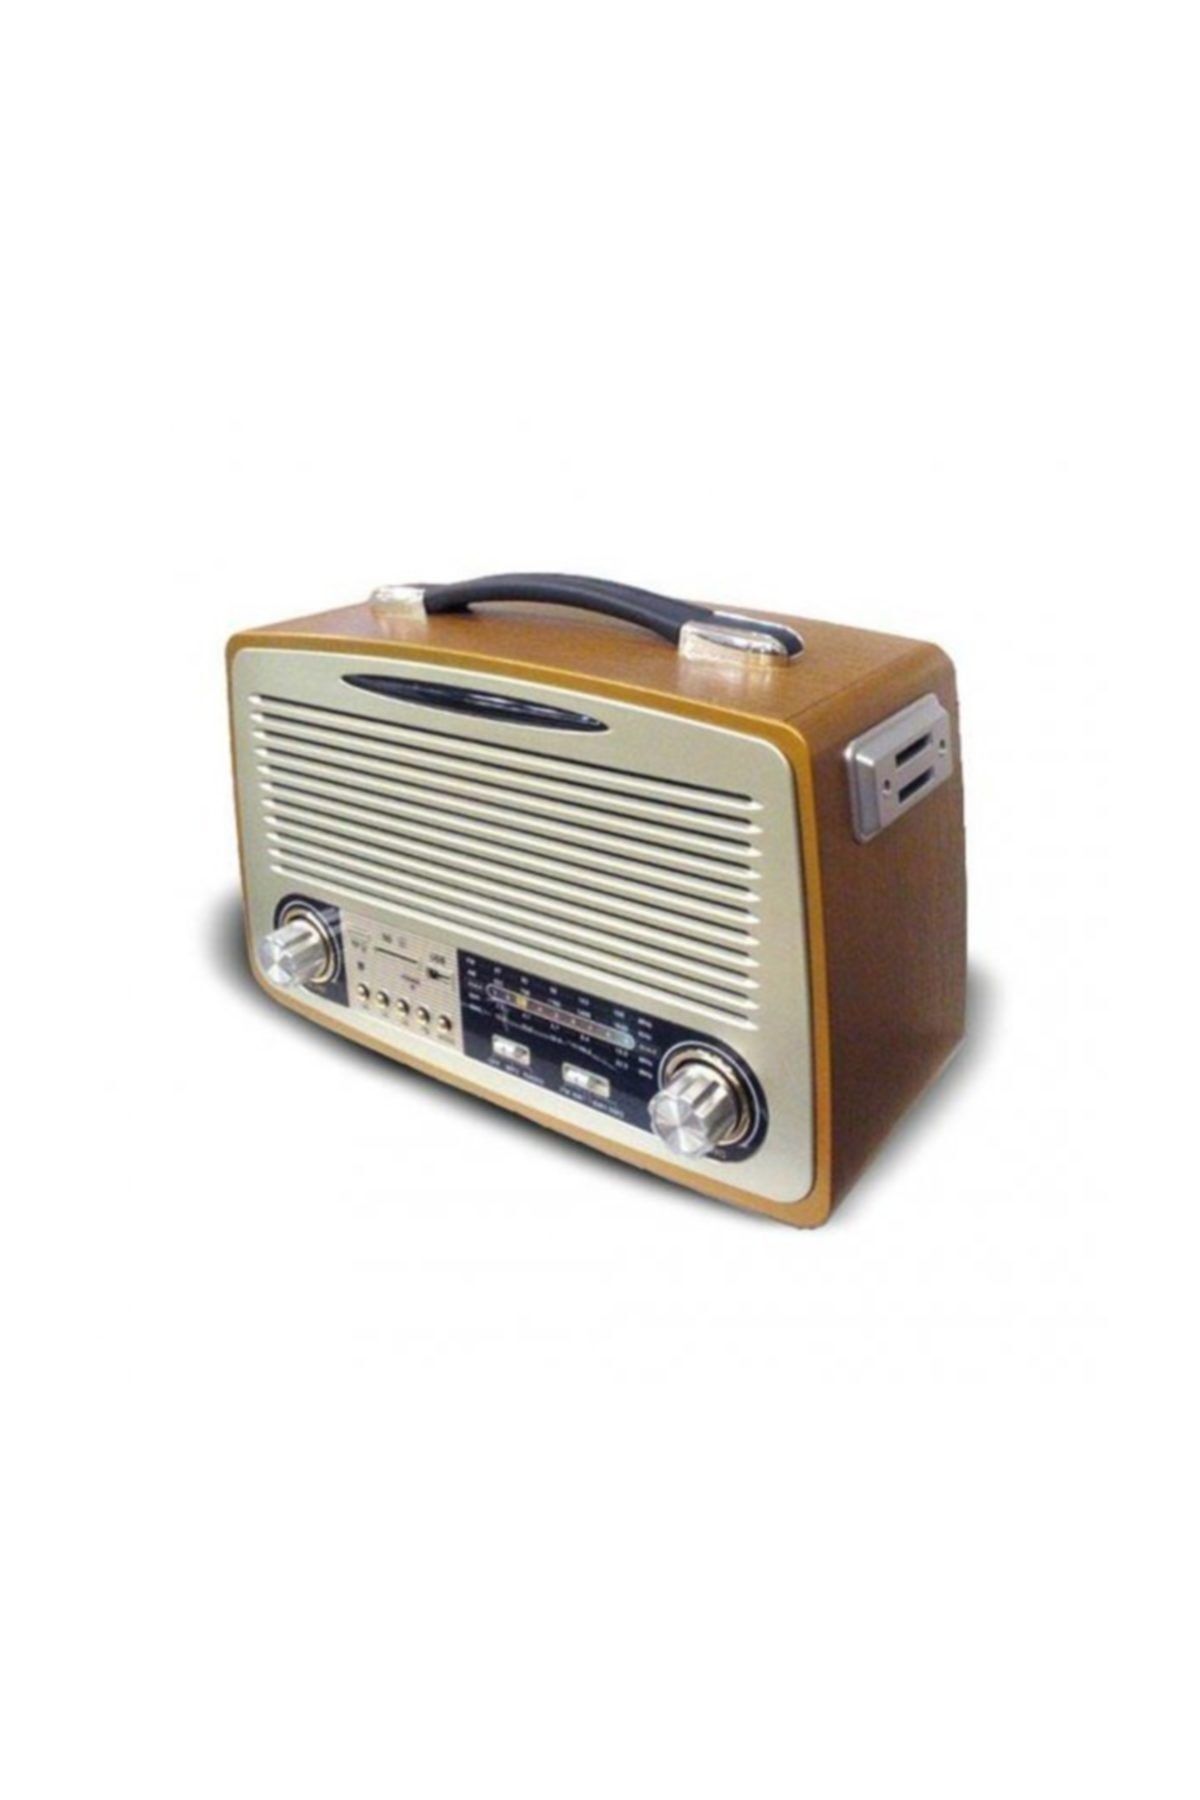 Kemai Nostalji Radyo Md-1700bt Bluetooth%2bfm Radyo Usb Sd Kart Açık Ahşap